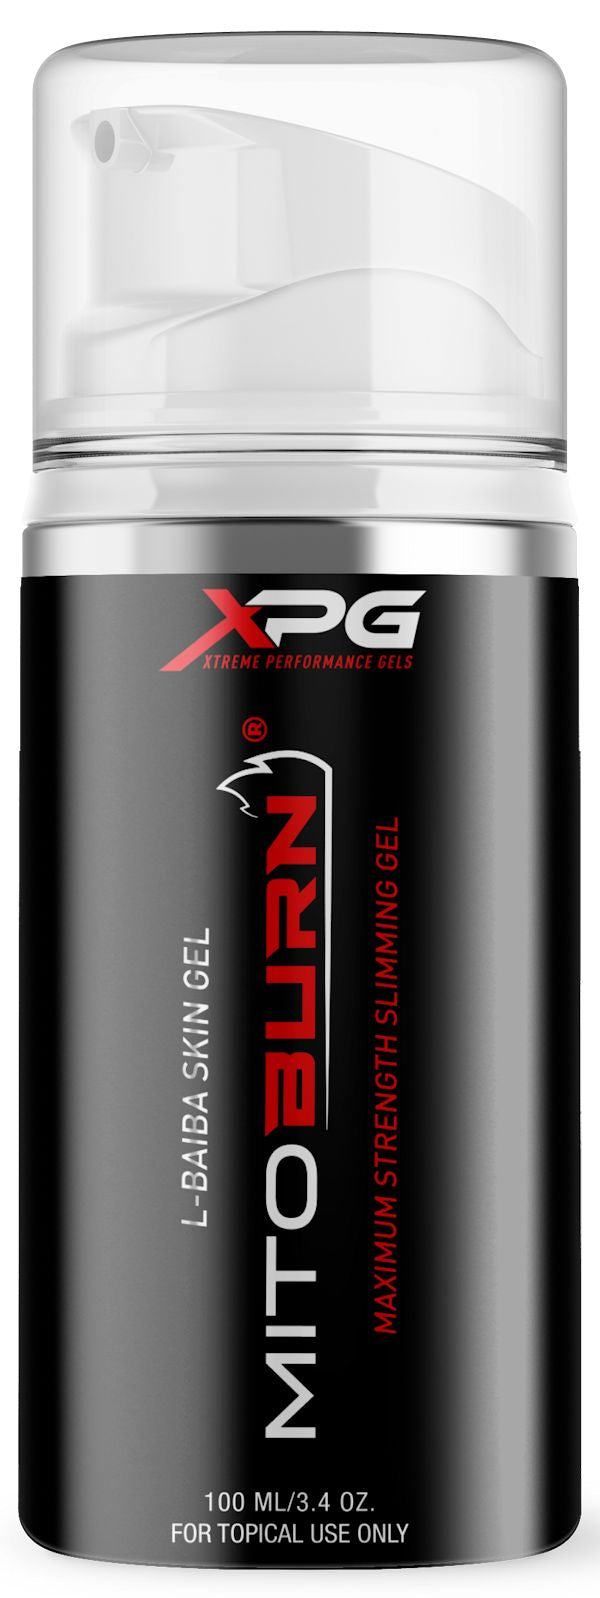 Xtreme Performance Gels XPG MitoBurn Gel Maximum Strength